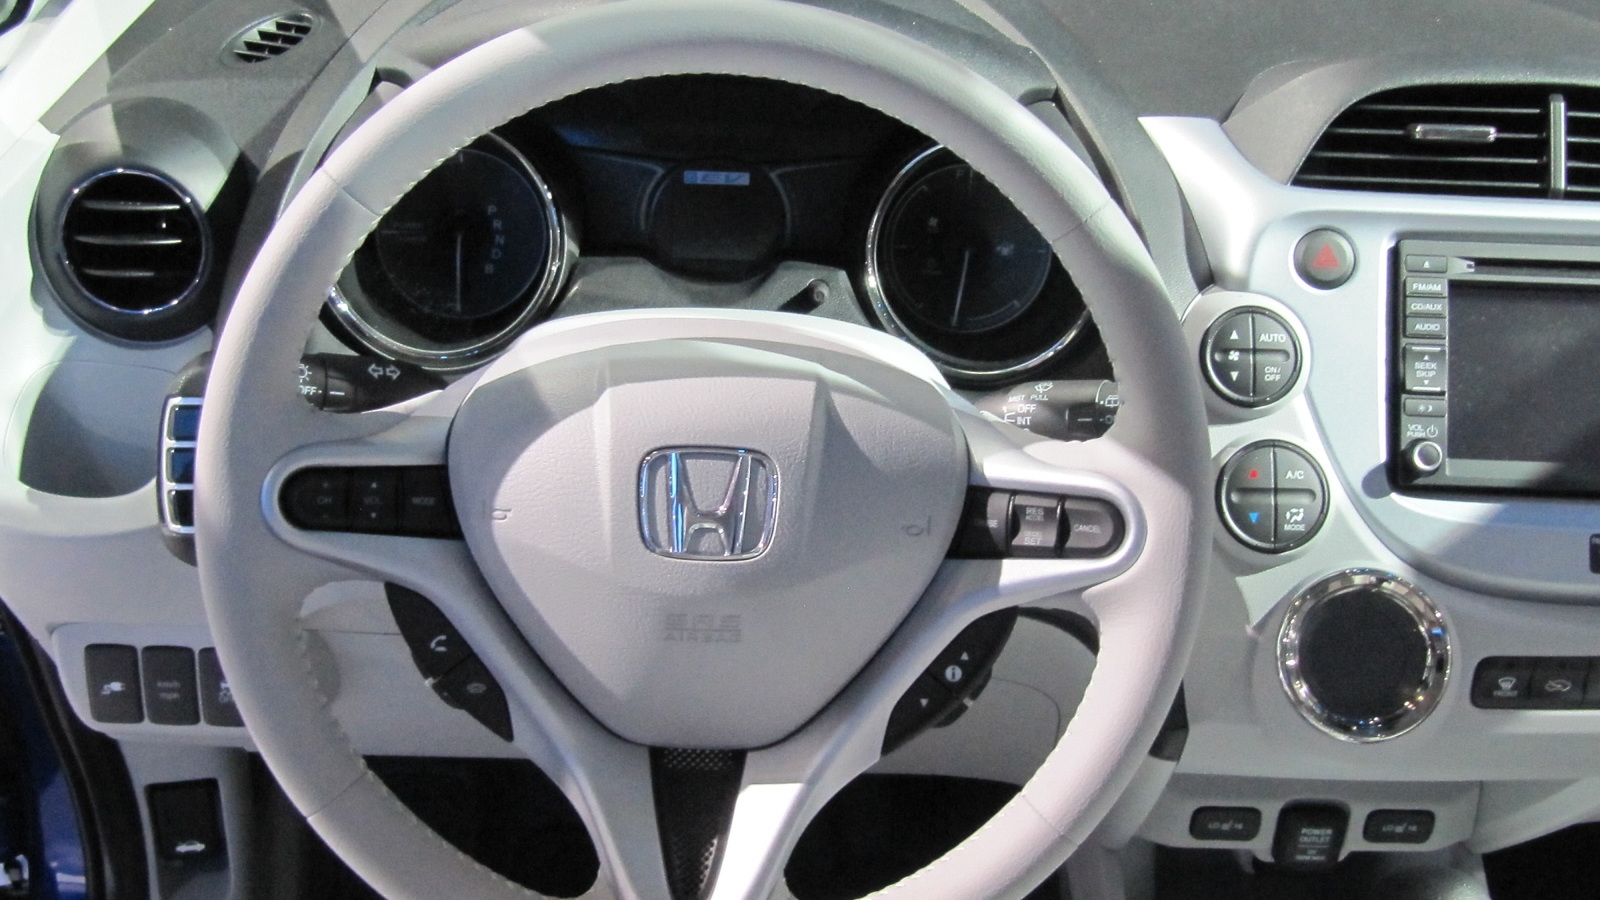 Honda Fit EV shown at Los Angeles Auto Show, Nov 2011